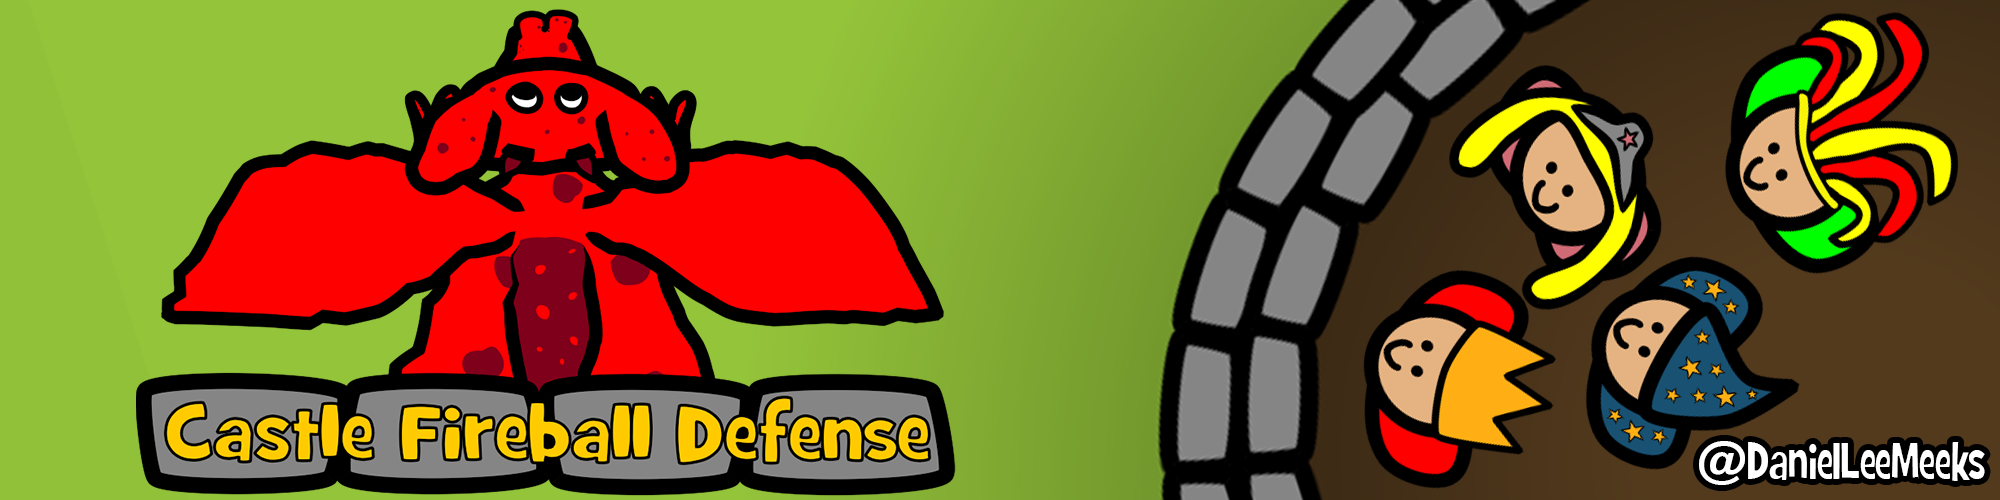 Castle Fireball Defense